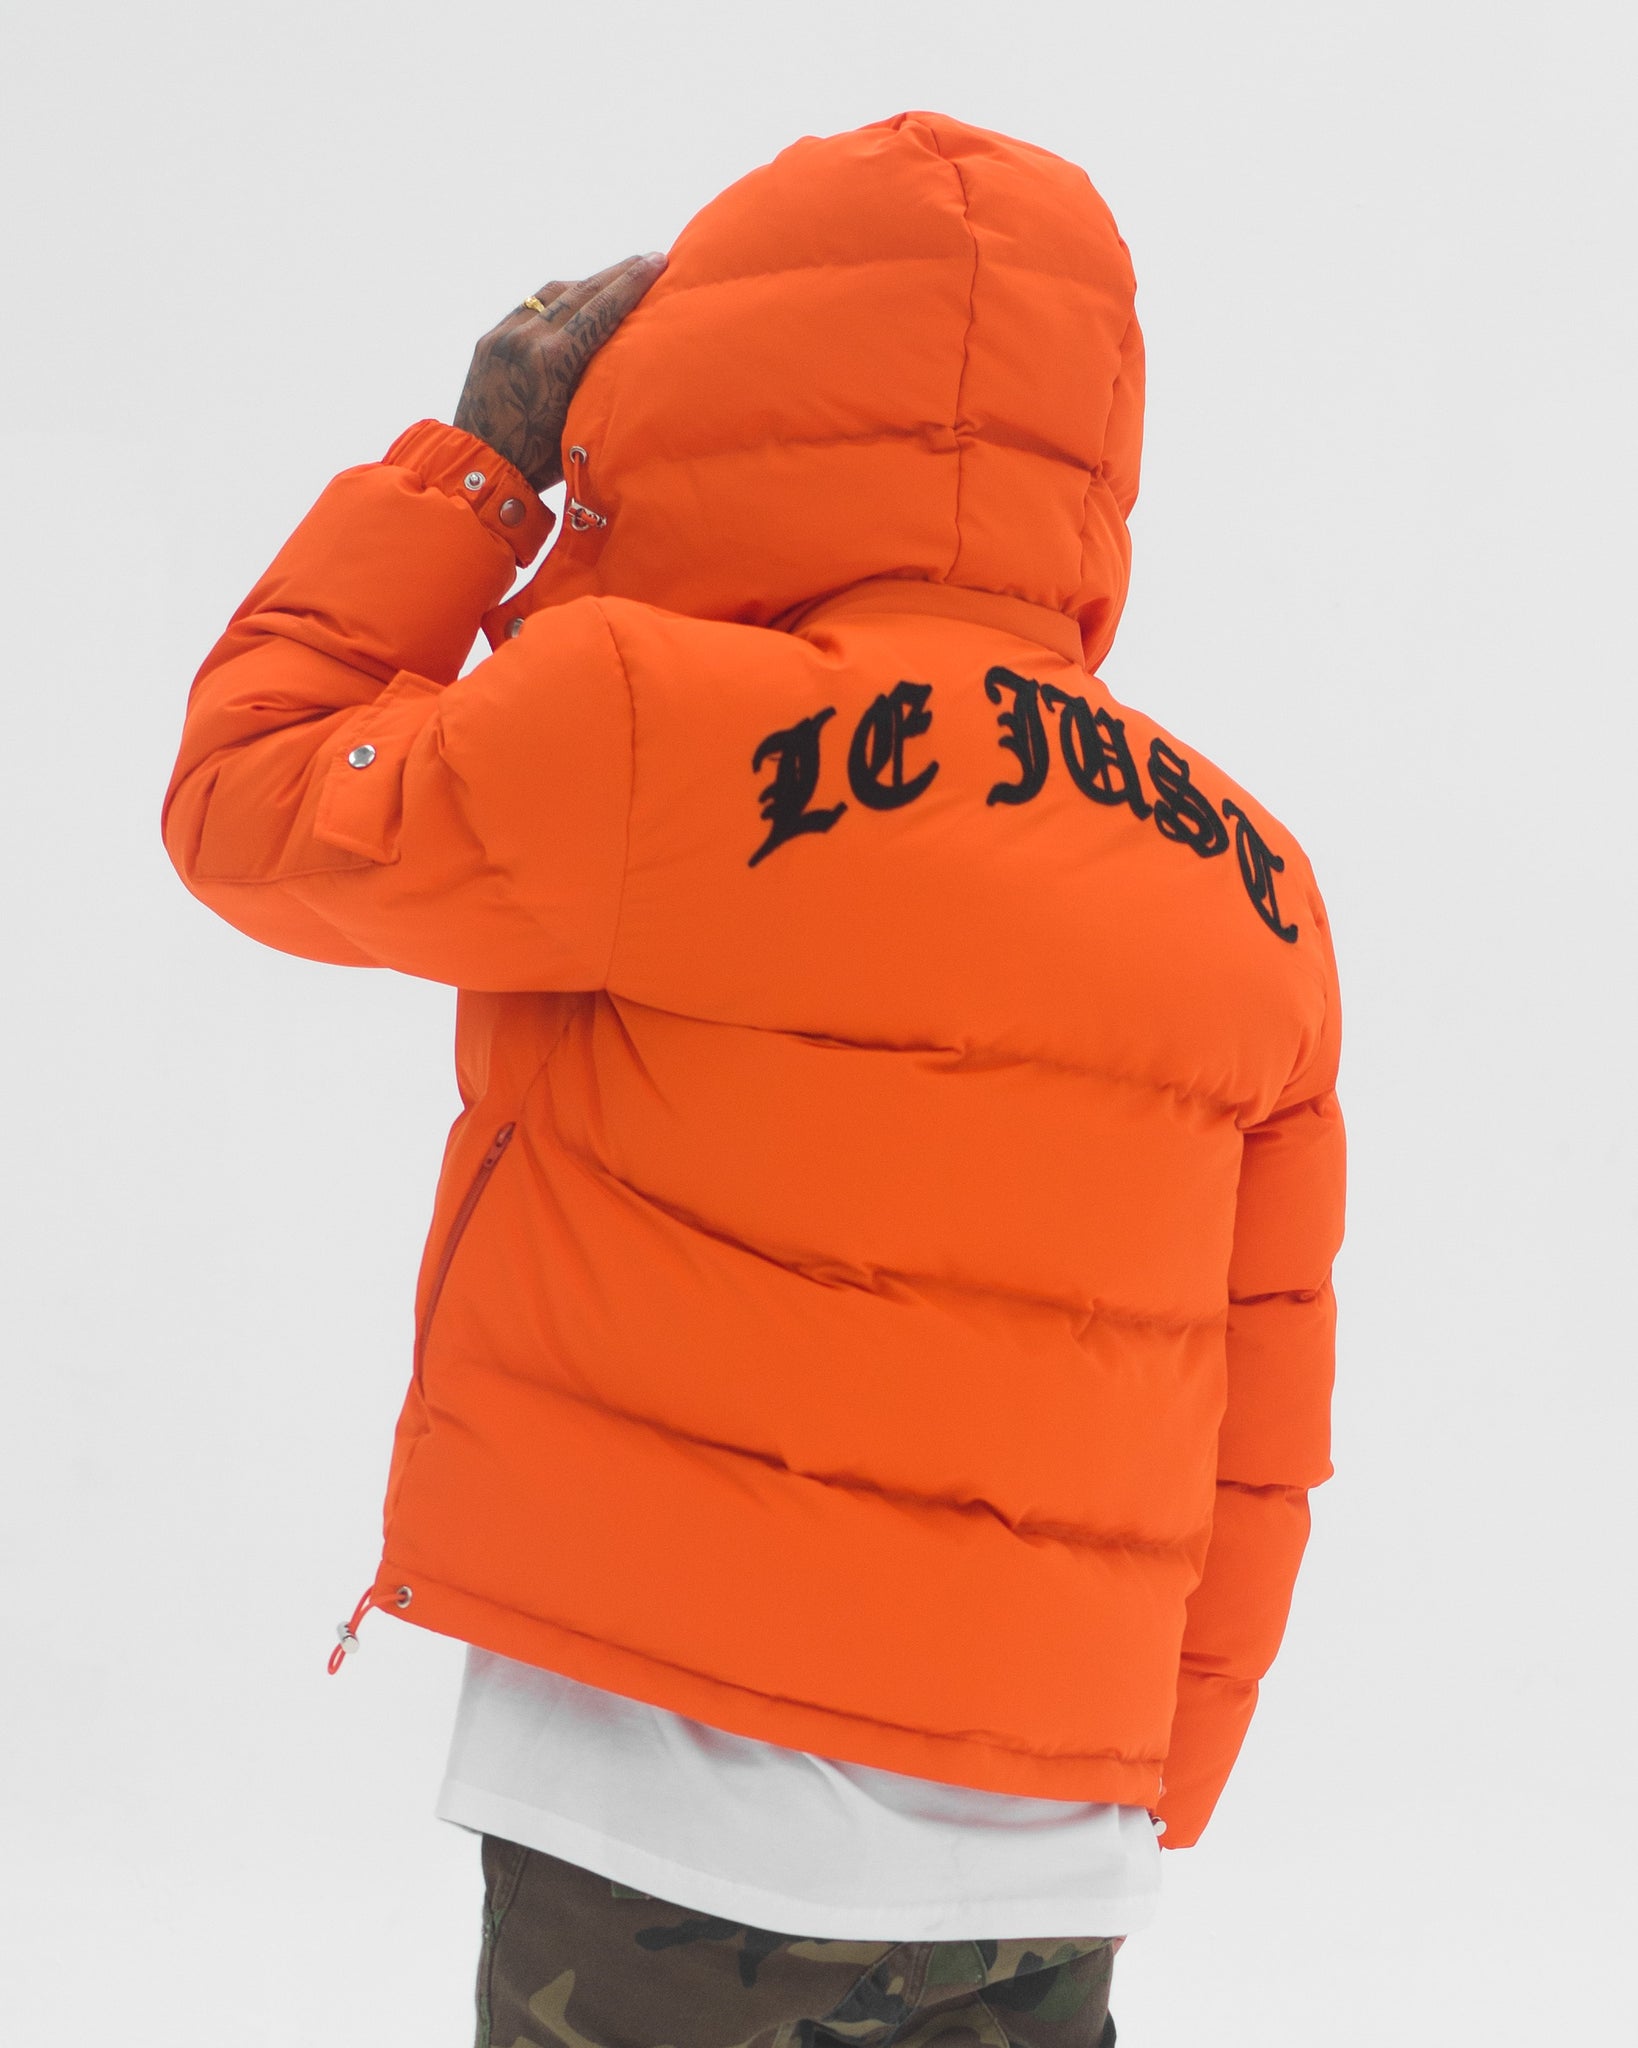 Orange Puffer Jacket